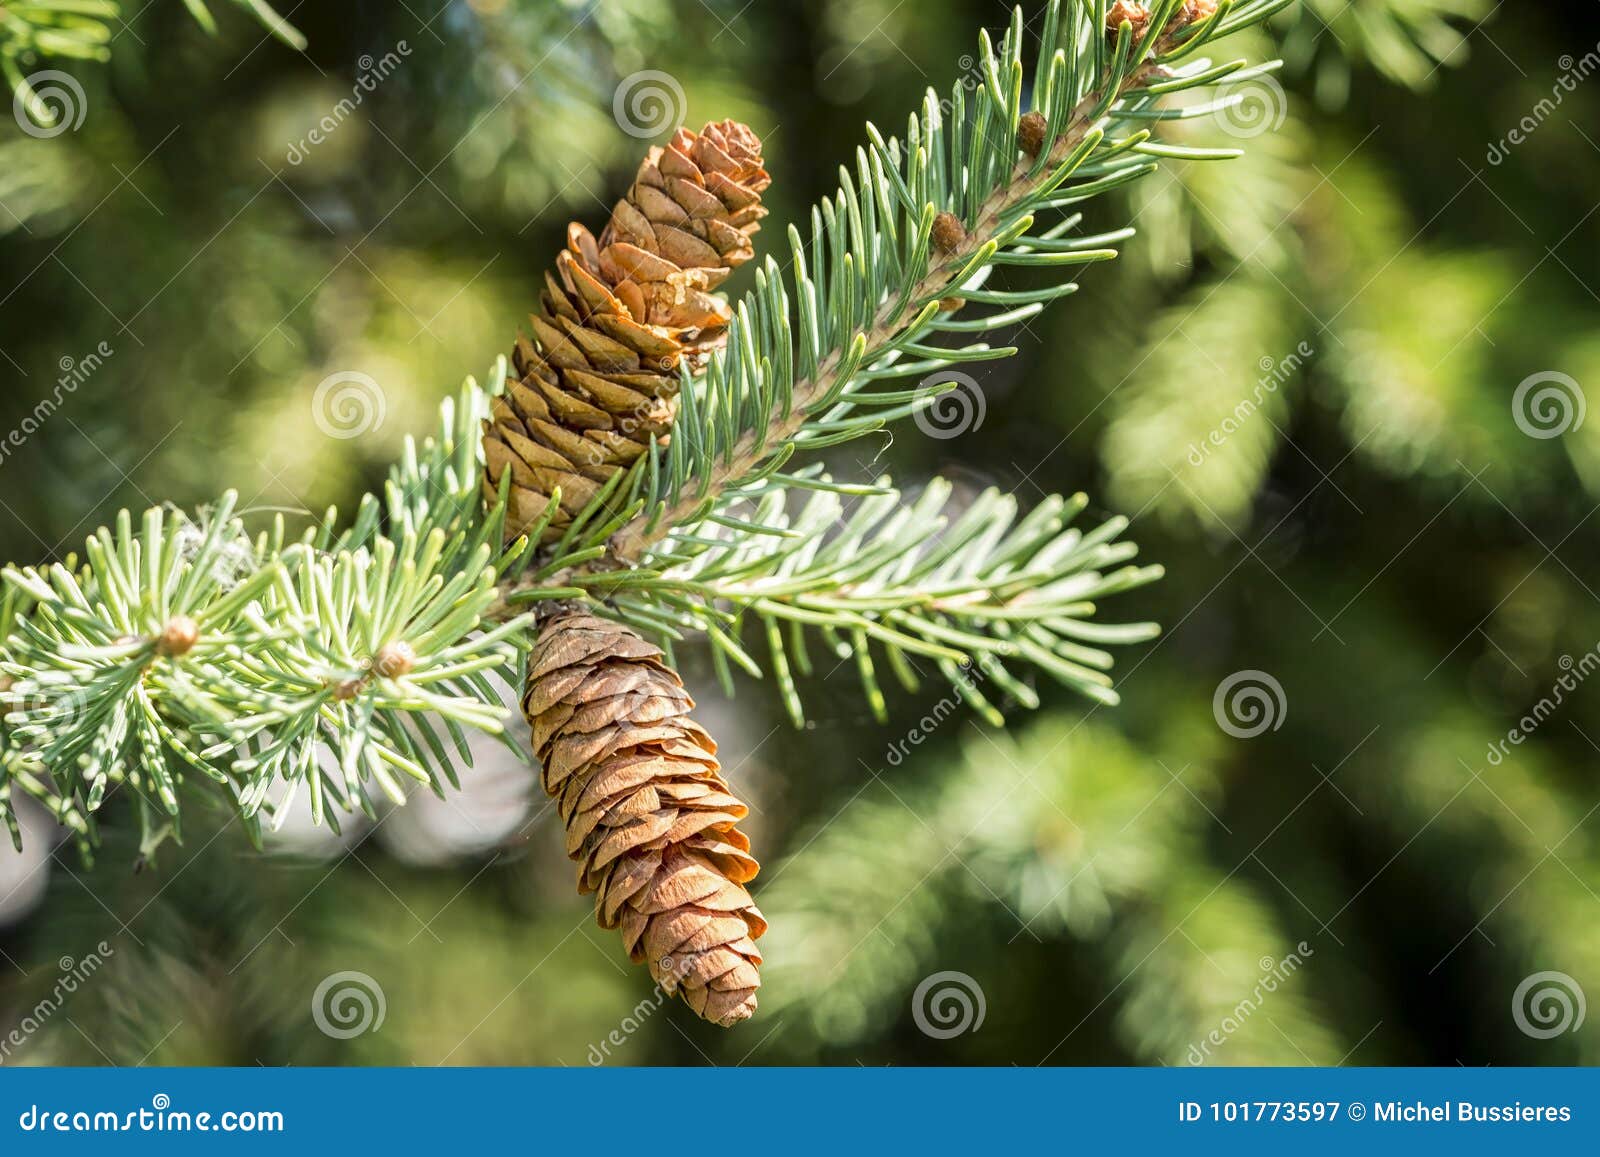 black spruce cone